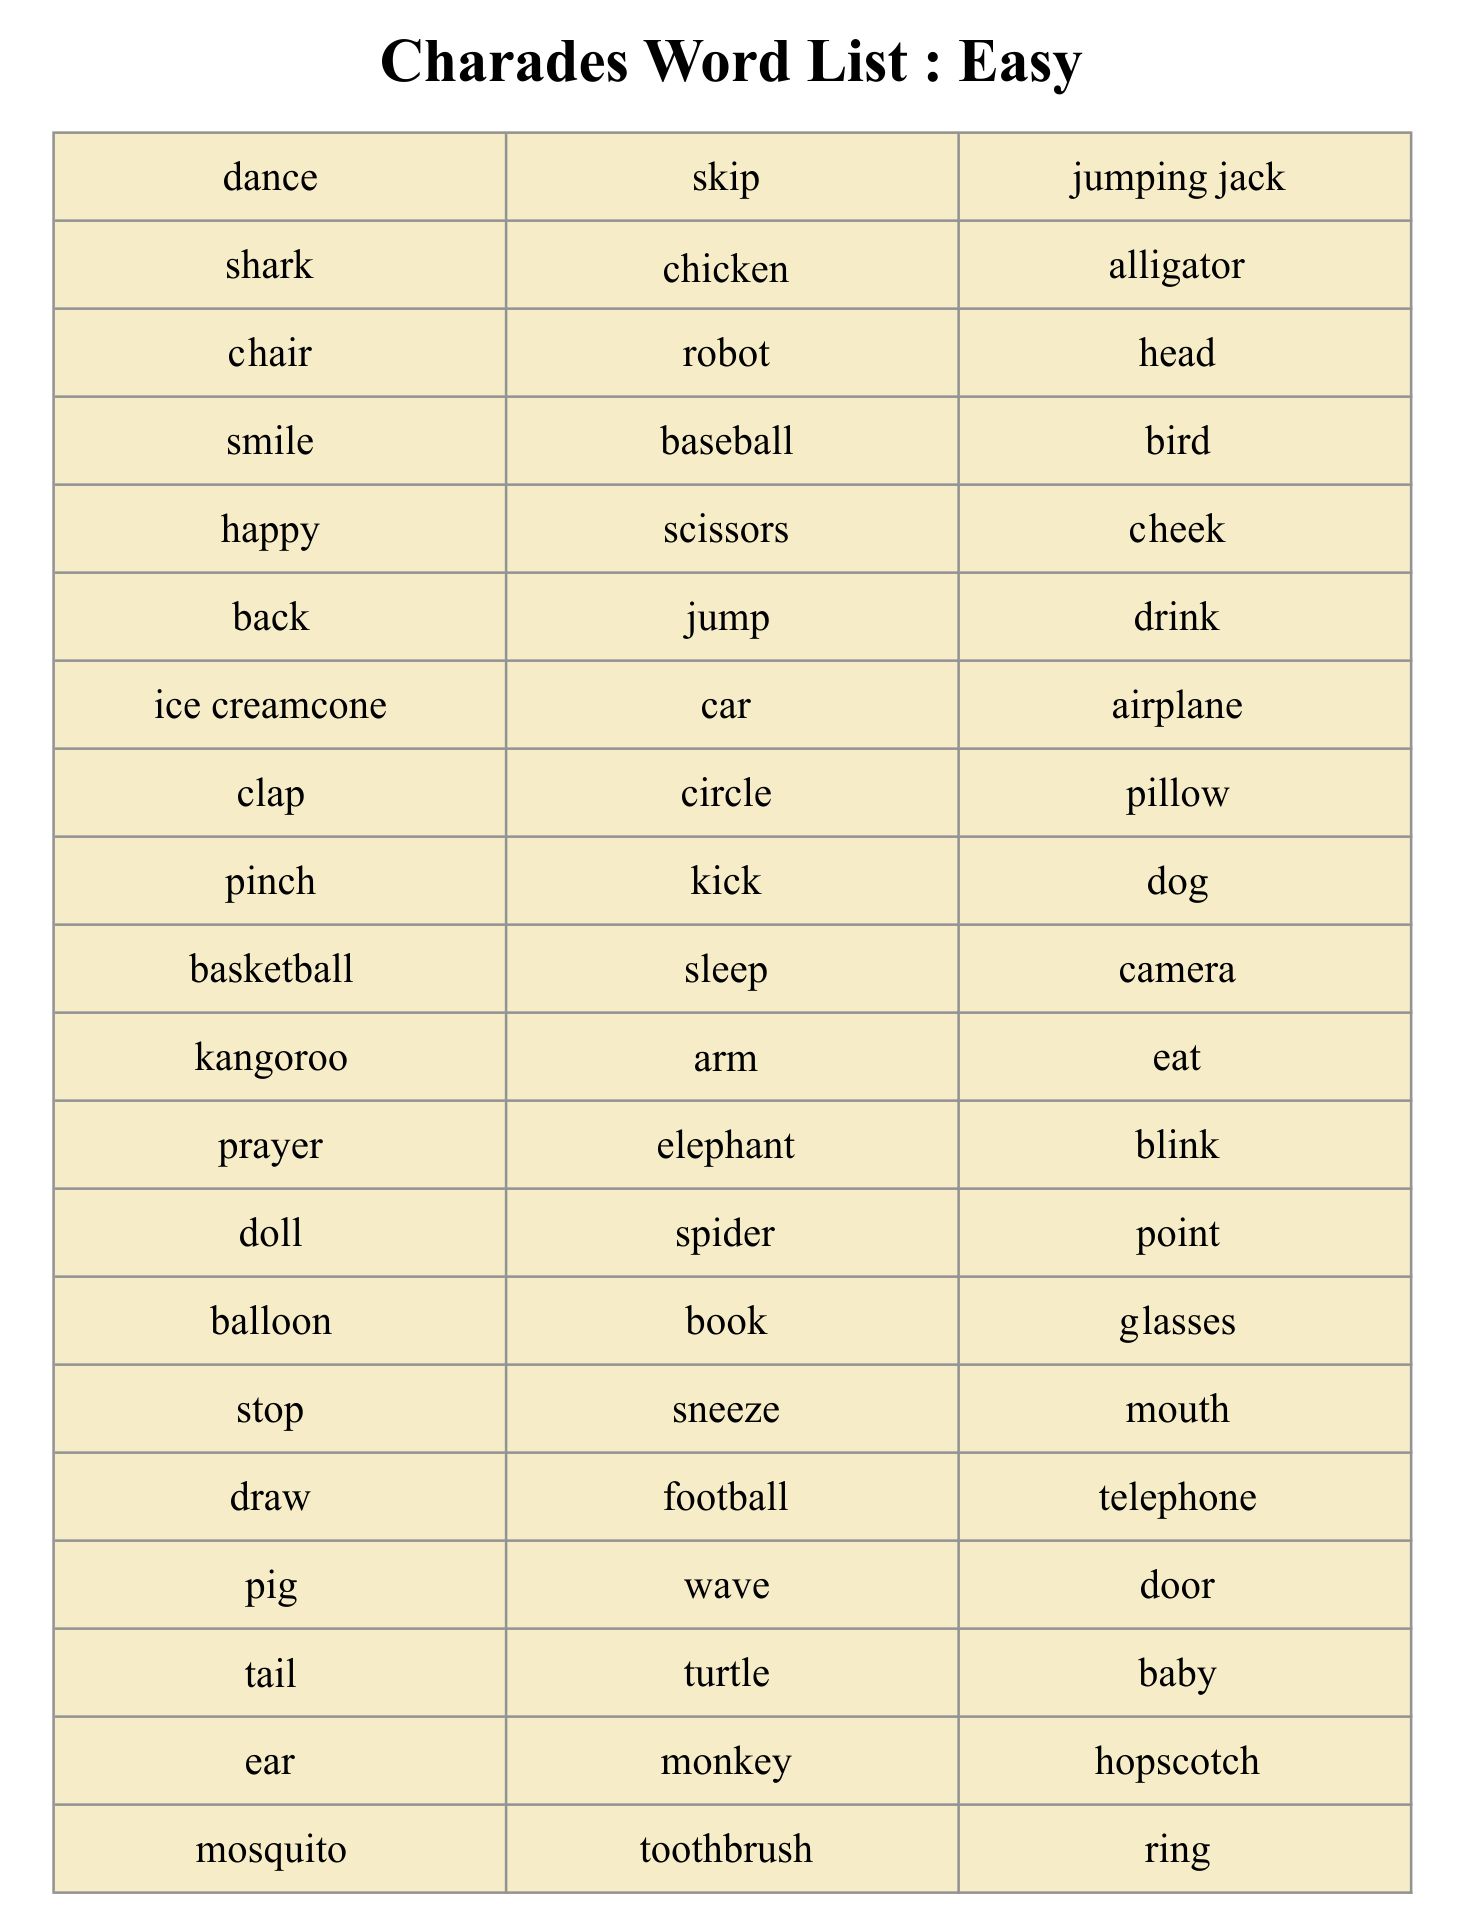 easy-charades-word-list-printable